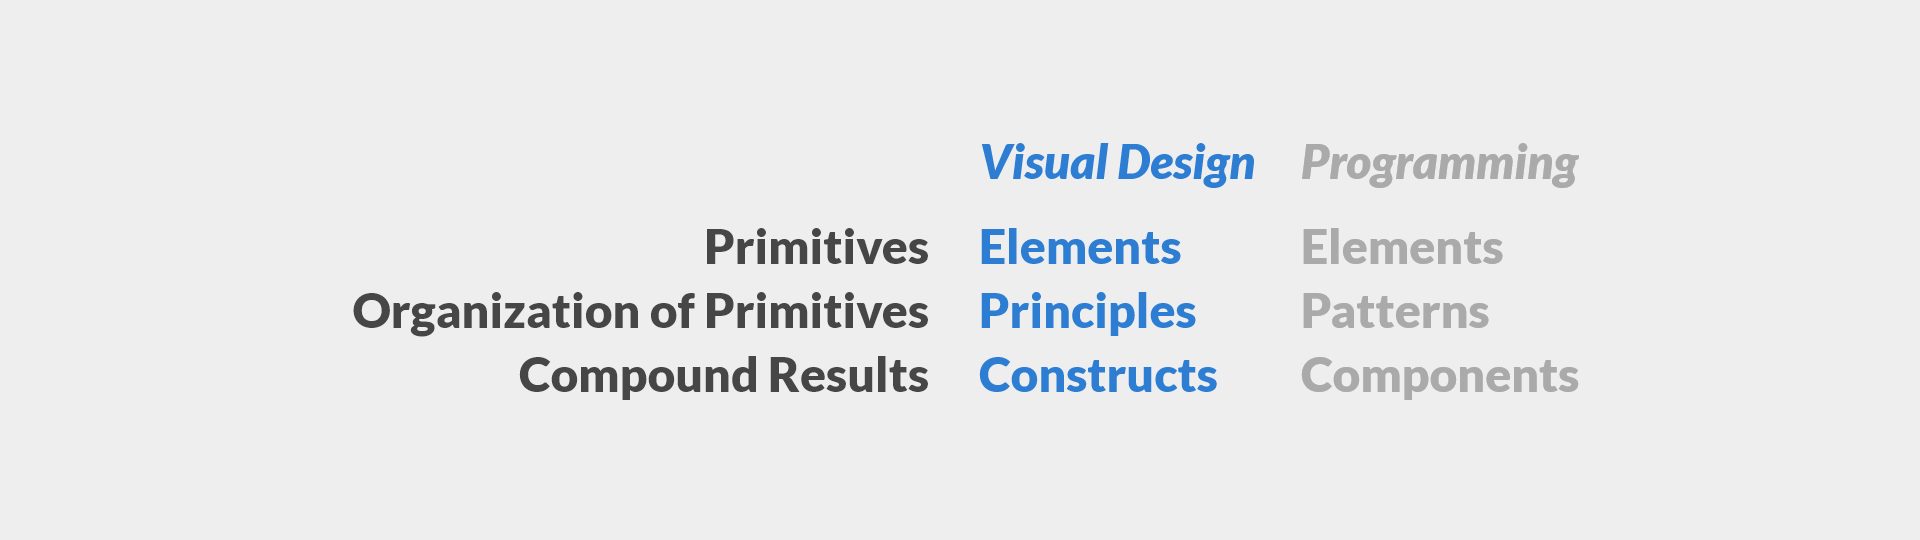 Visual Design and Programming